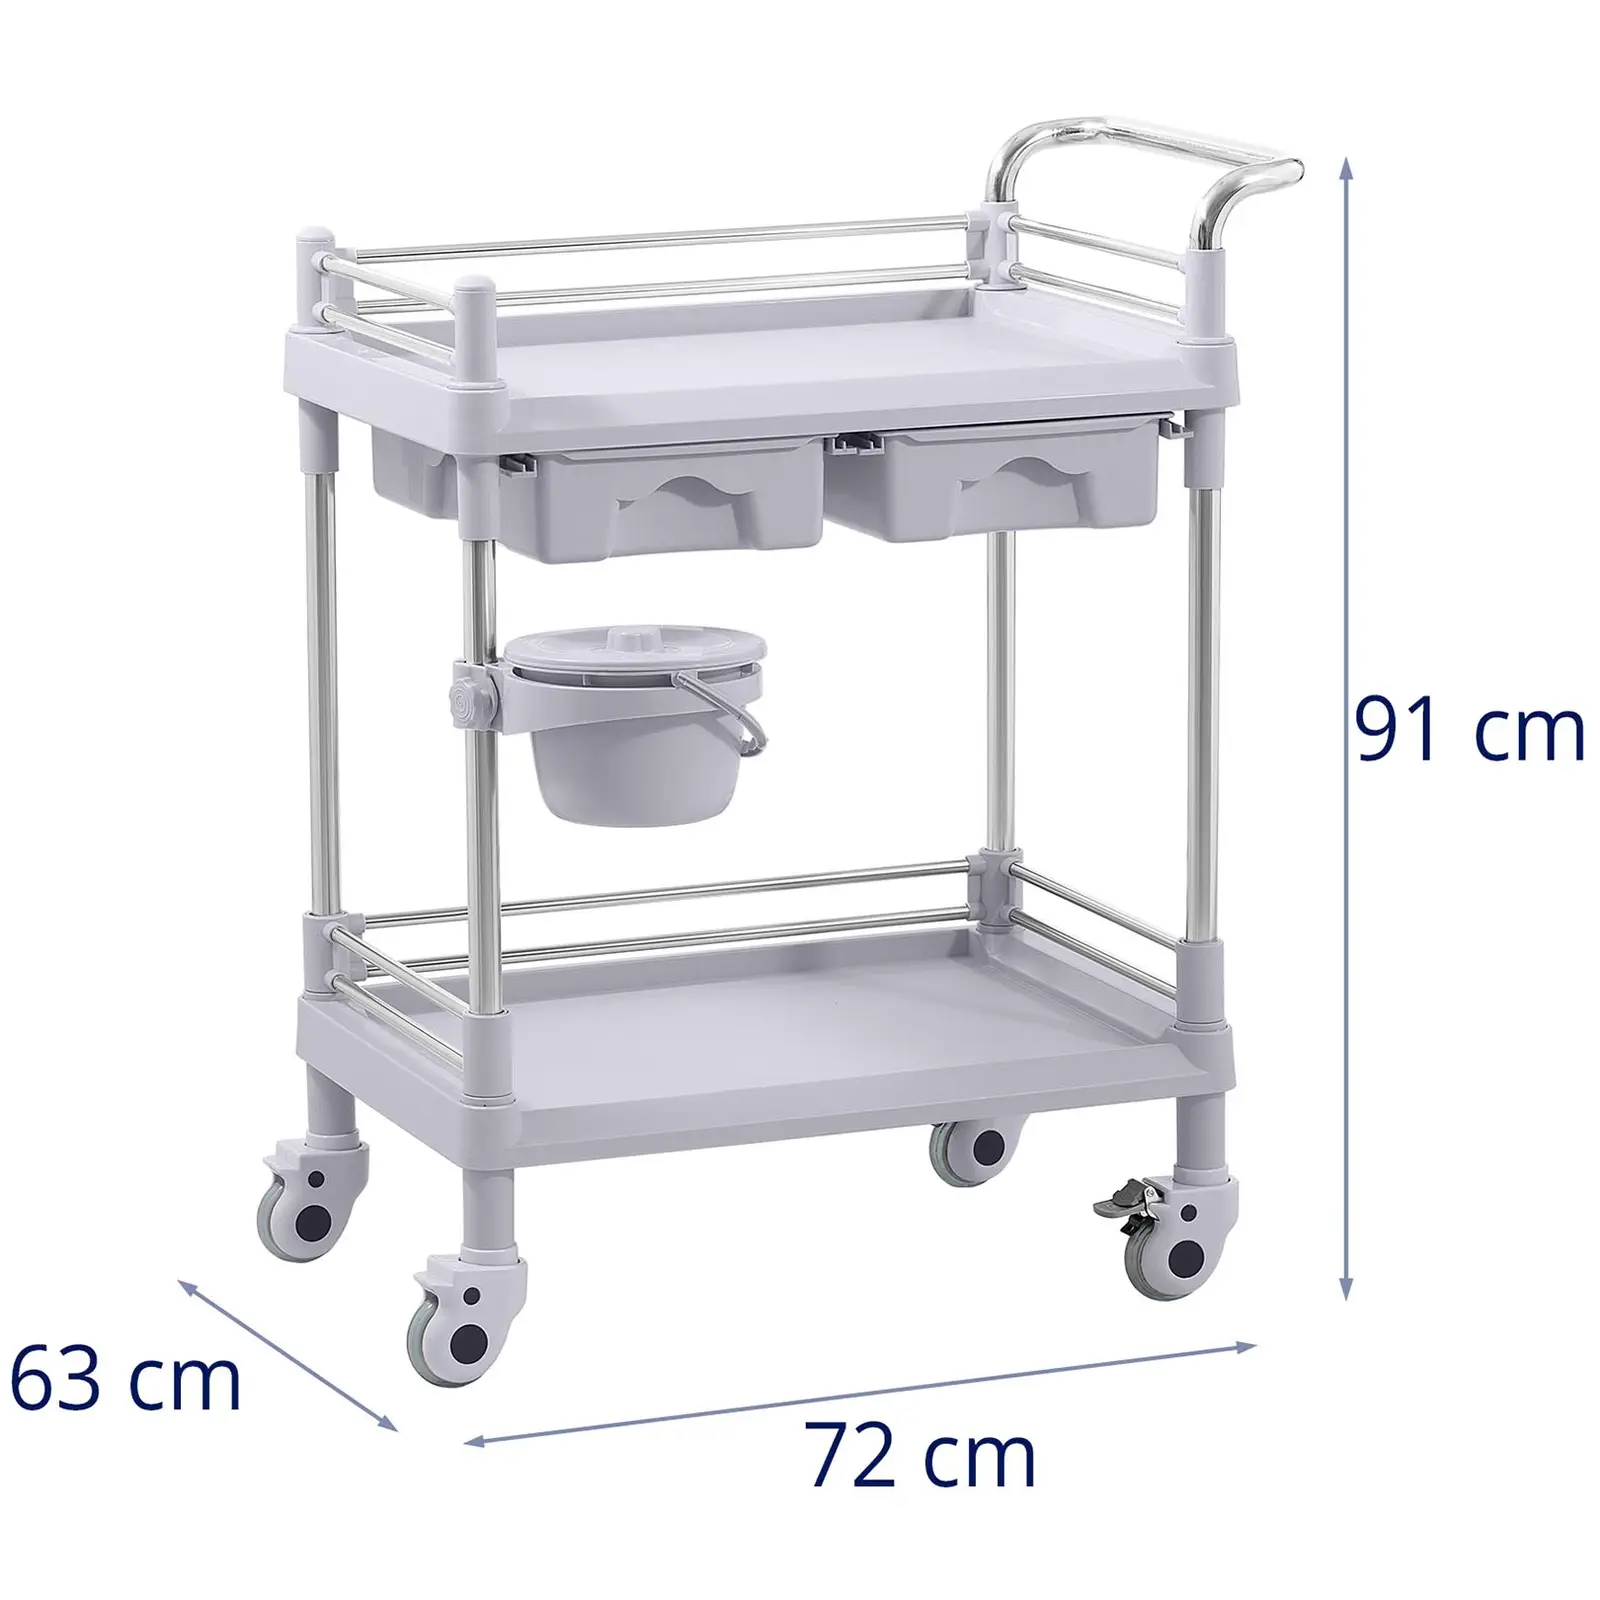 B-varer Laboratory Trolley - 2 shelves each 53 x 38 x 14 cm - 2 drawers - 40 kg